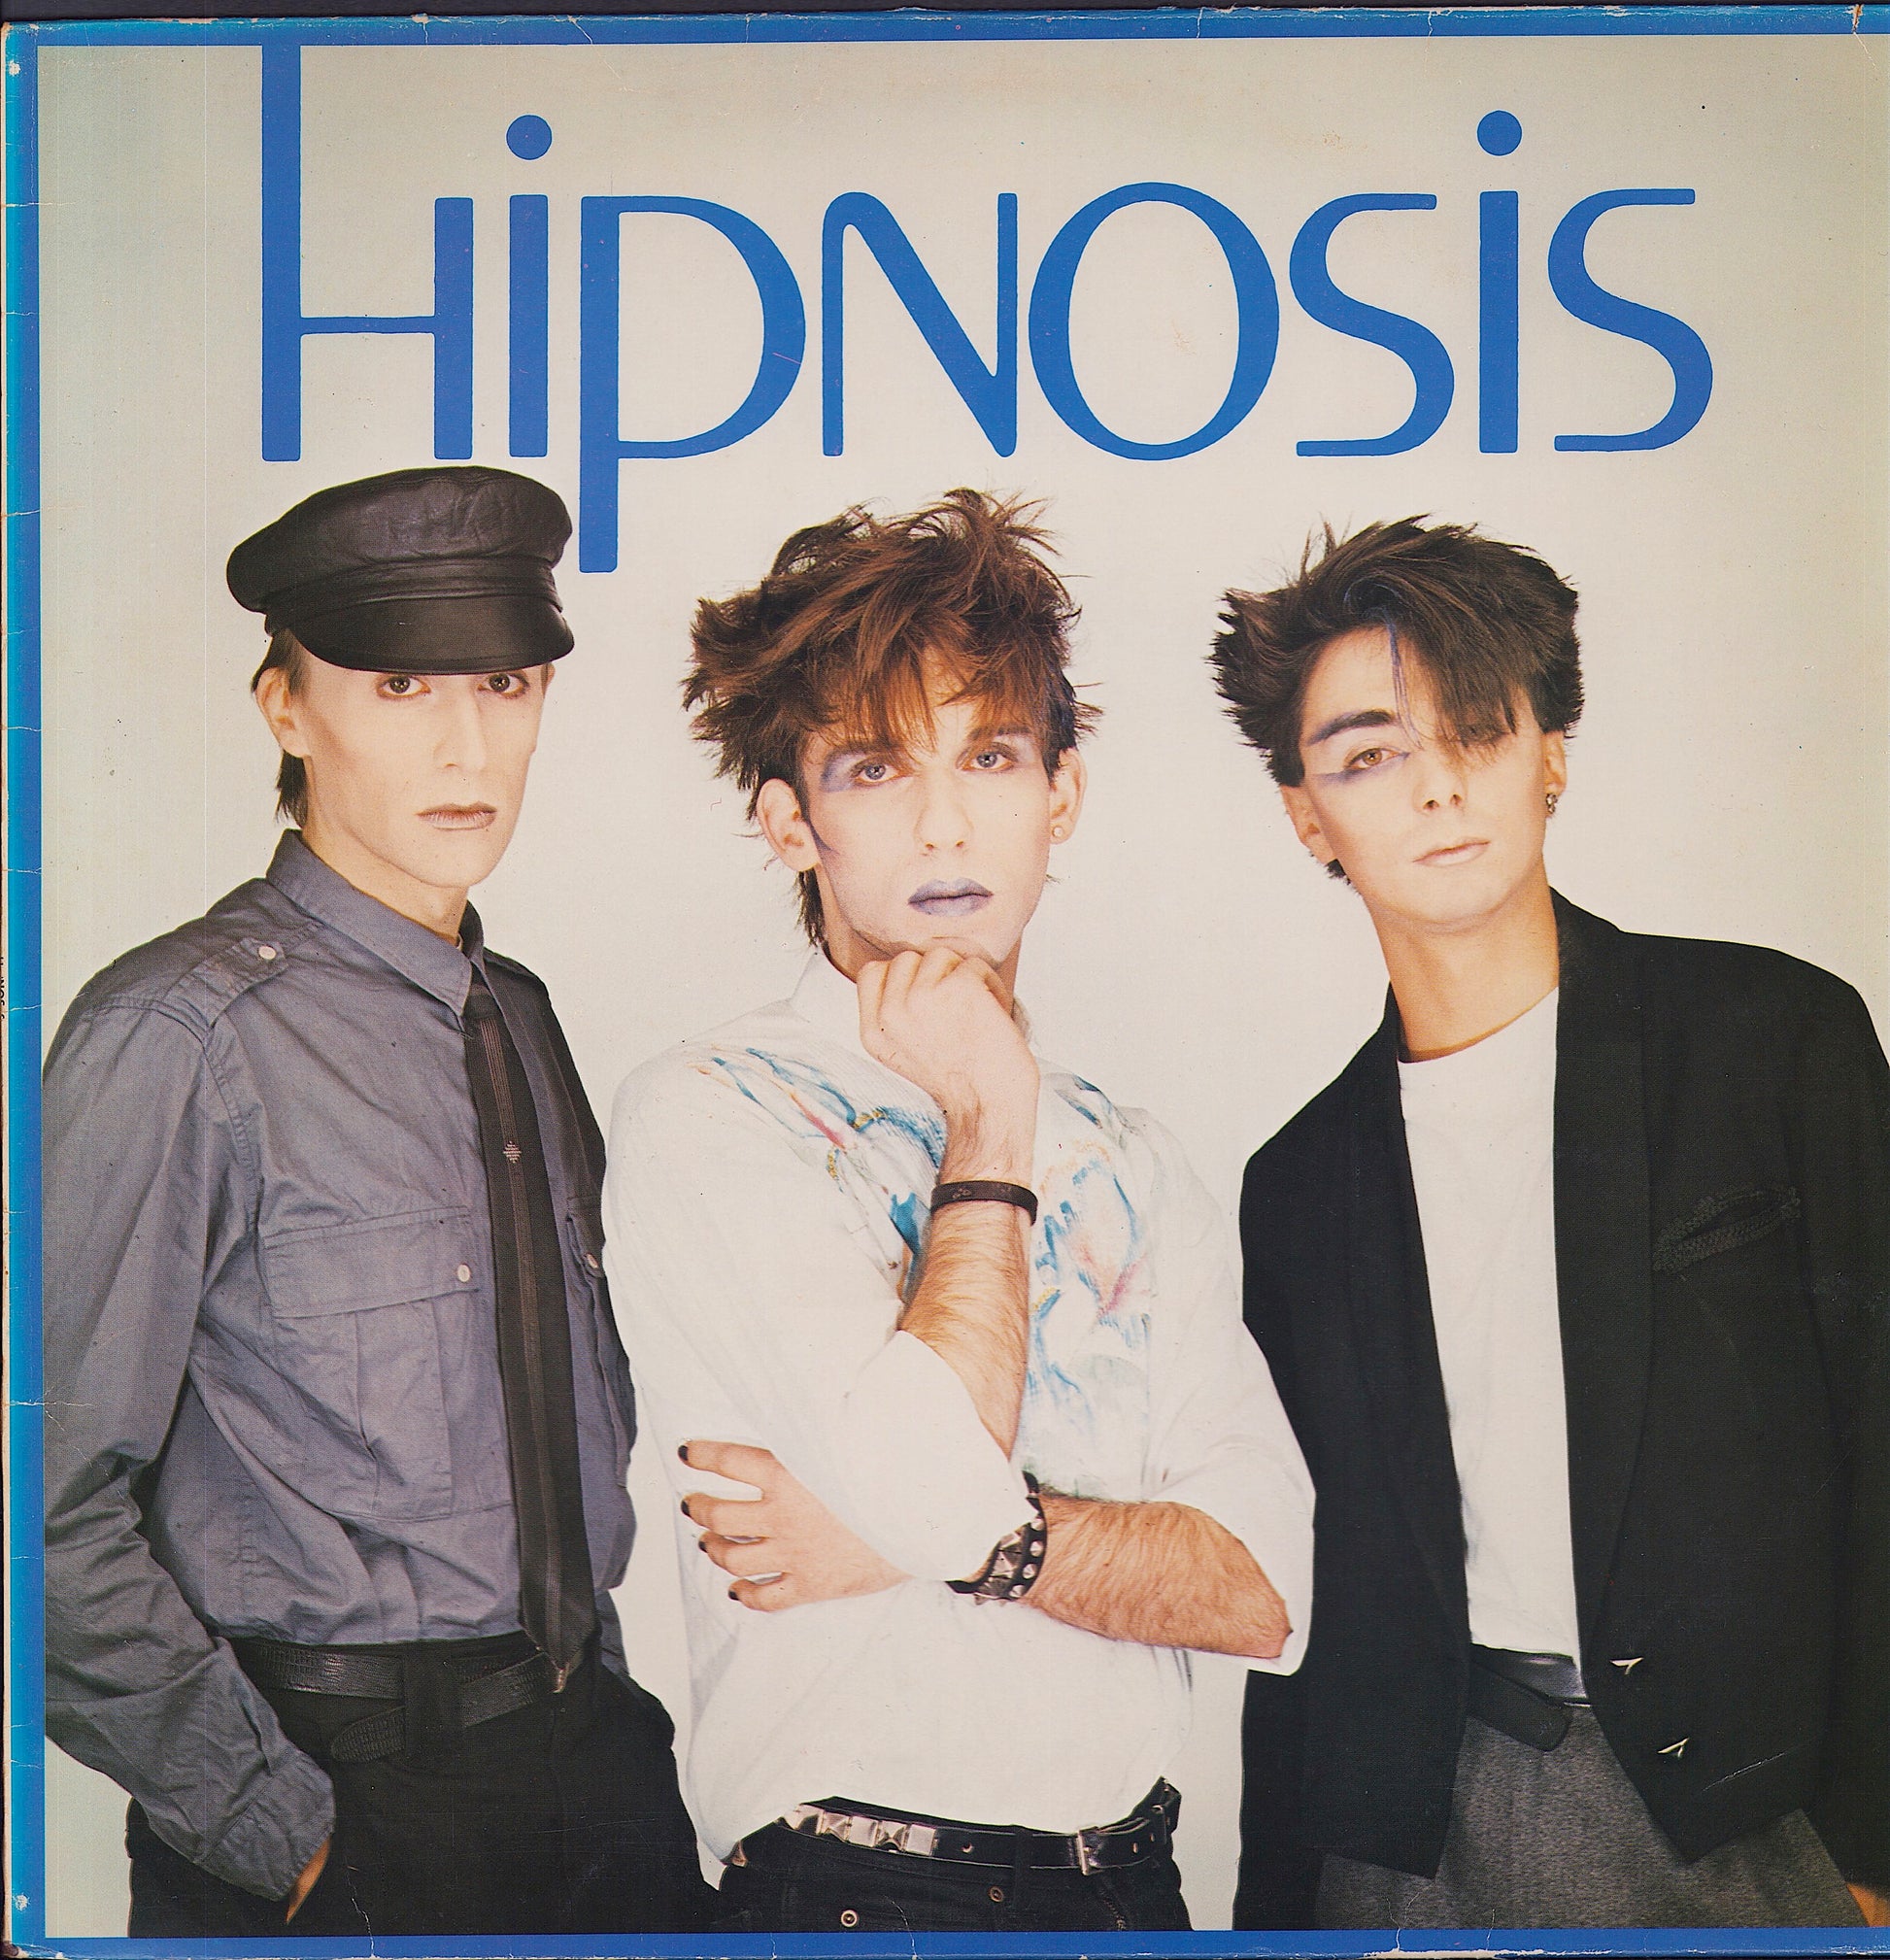 Hipnosis - Hipnosis (Vinyl LP)